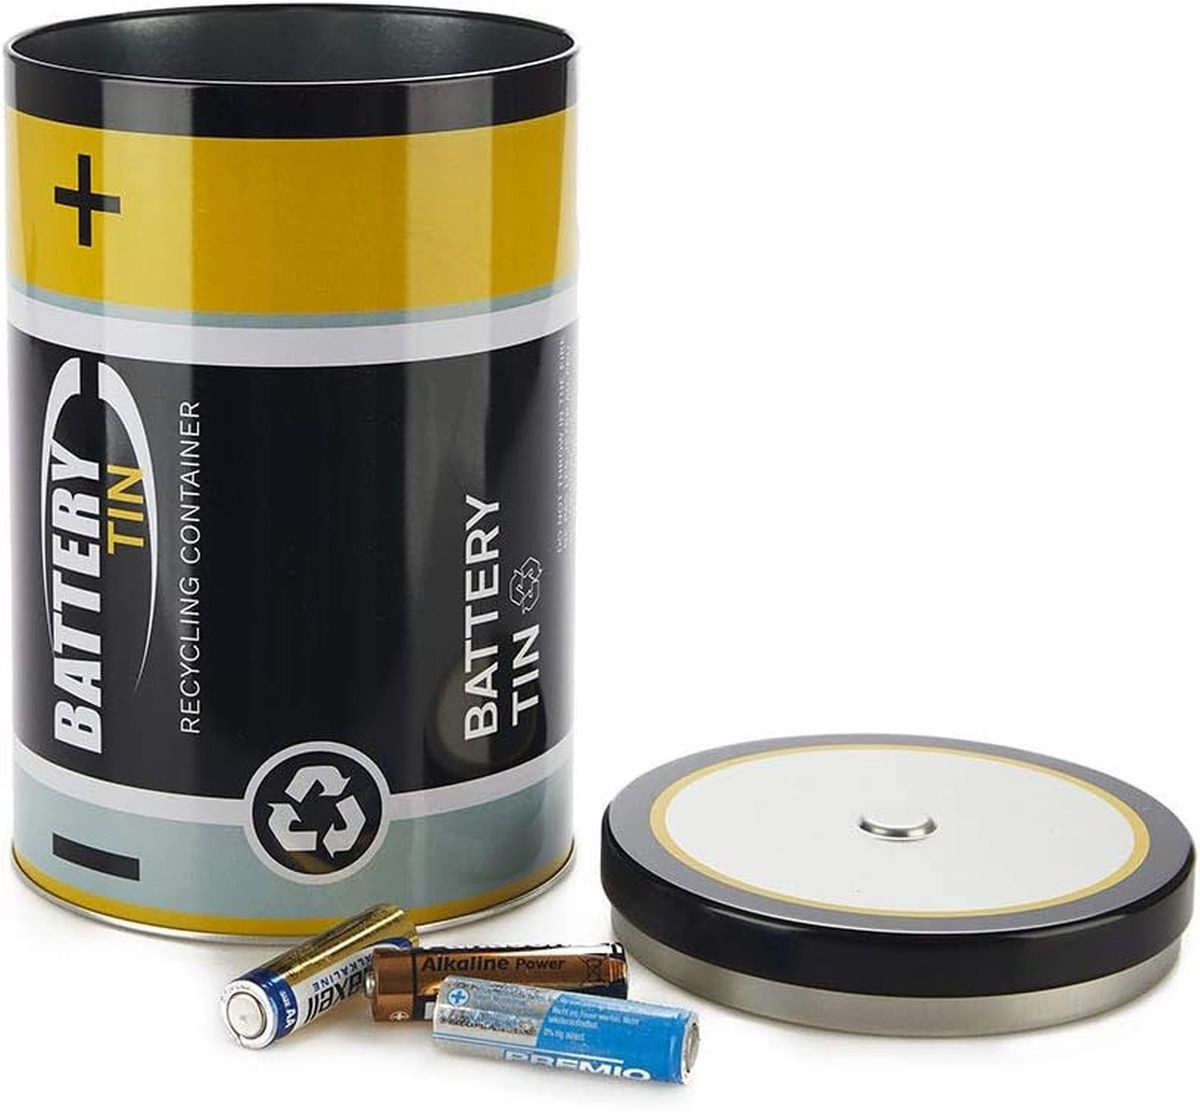 WestCraft Batteriebox Sammelbox Recycling-Batteriebehälter saubere Batterie-Entsorgung, für Heim & Gewerbe, umweltbewusst Batterien Sammeln